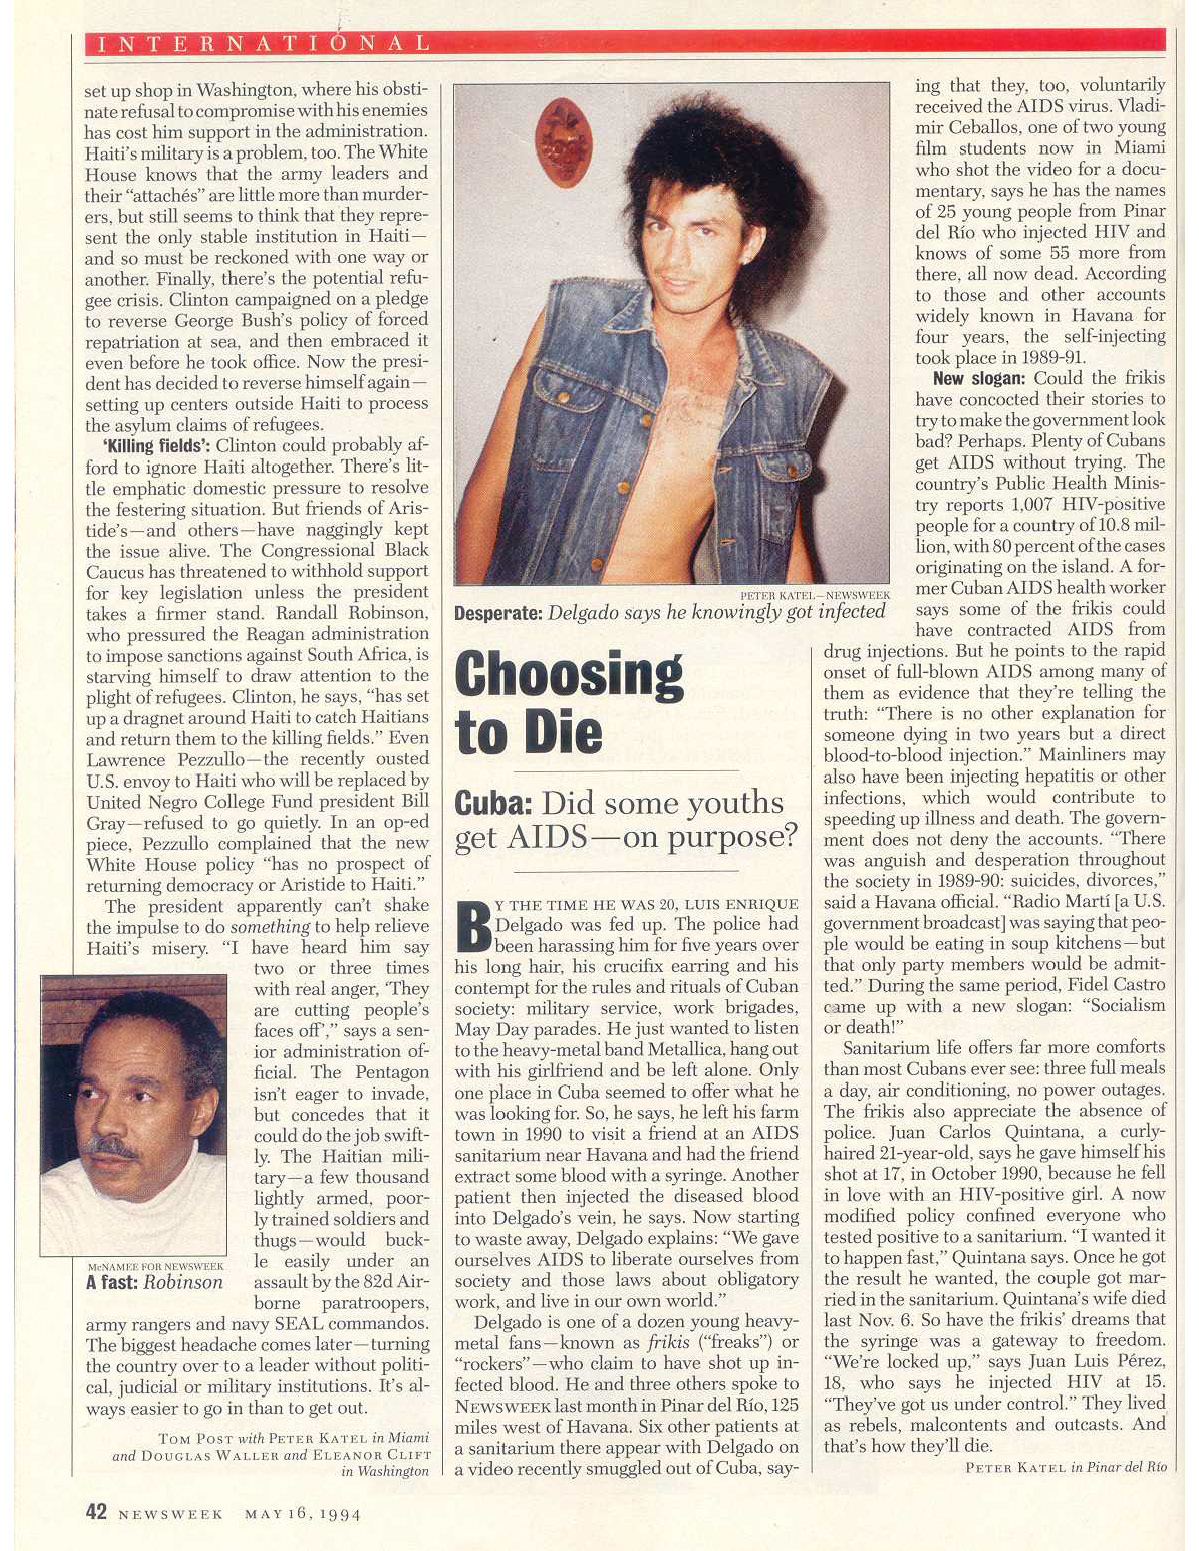 Peter Katel in Pinar Del Rio, Cuba – NEWSWEEK Magazine (1994)